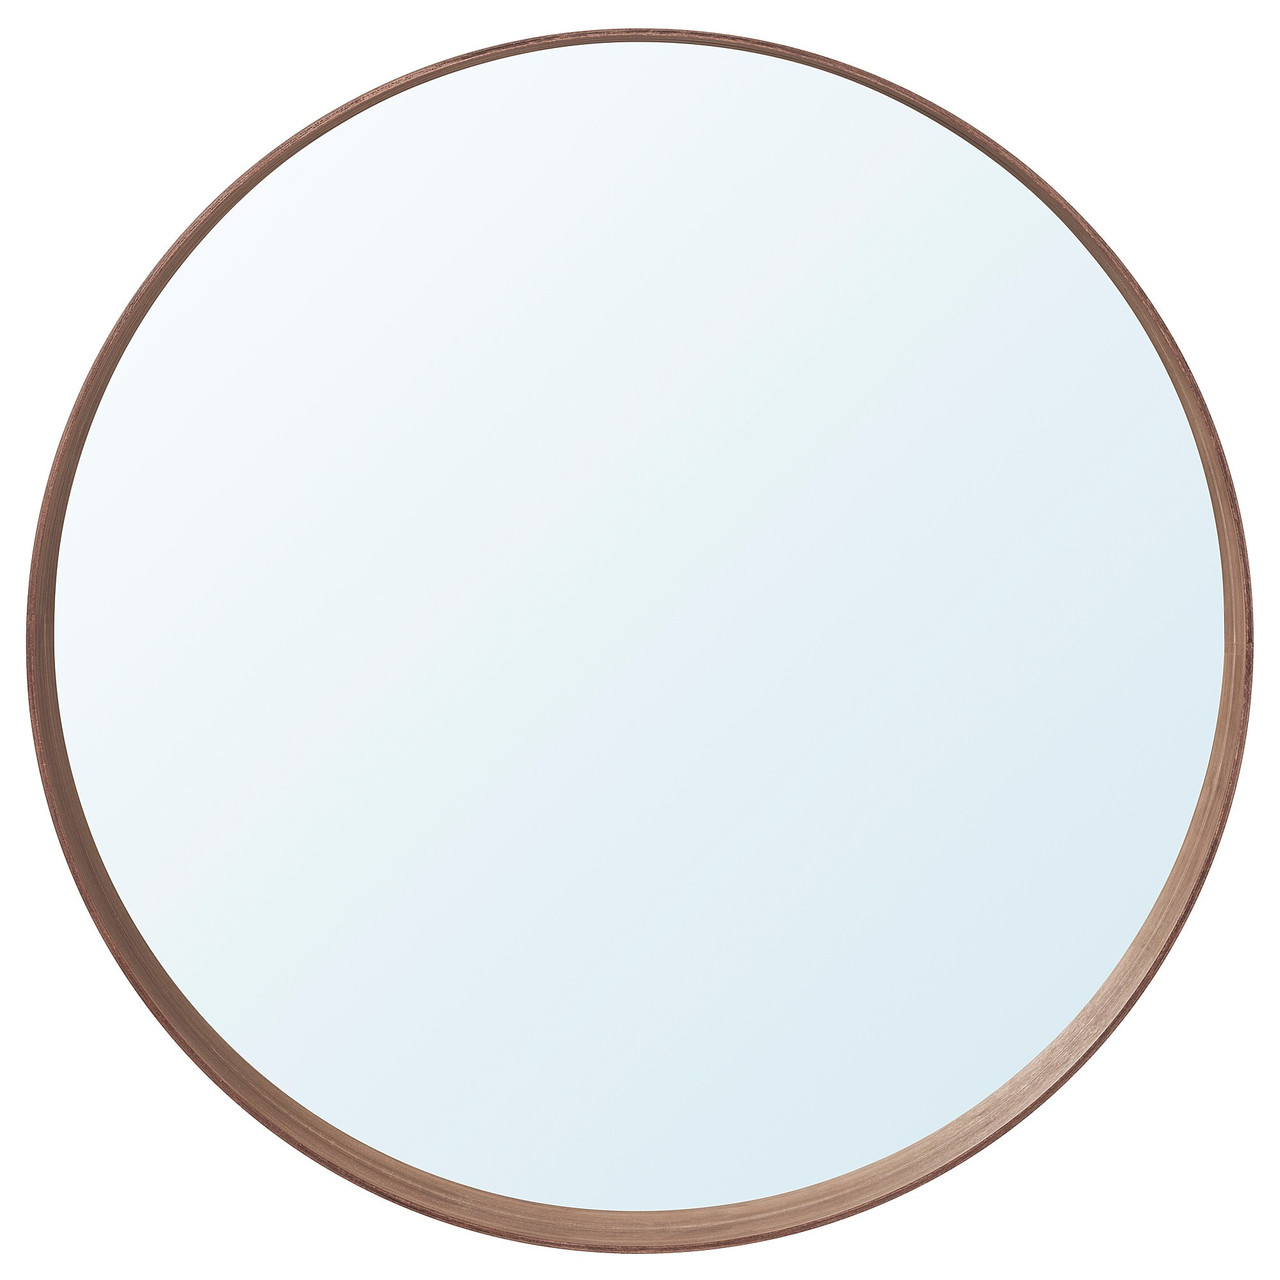 Зеркало СТОКГОЛЬМ диаметр 80 см шпон грецкого ореха ИКЕА, IKEA